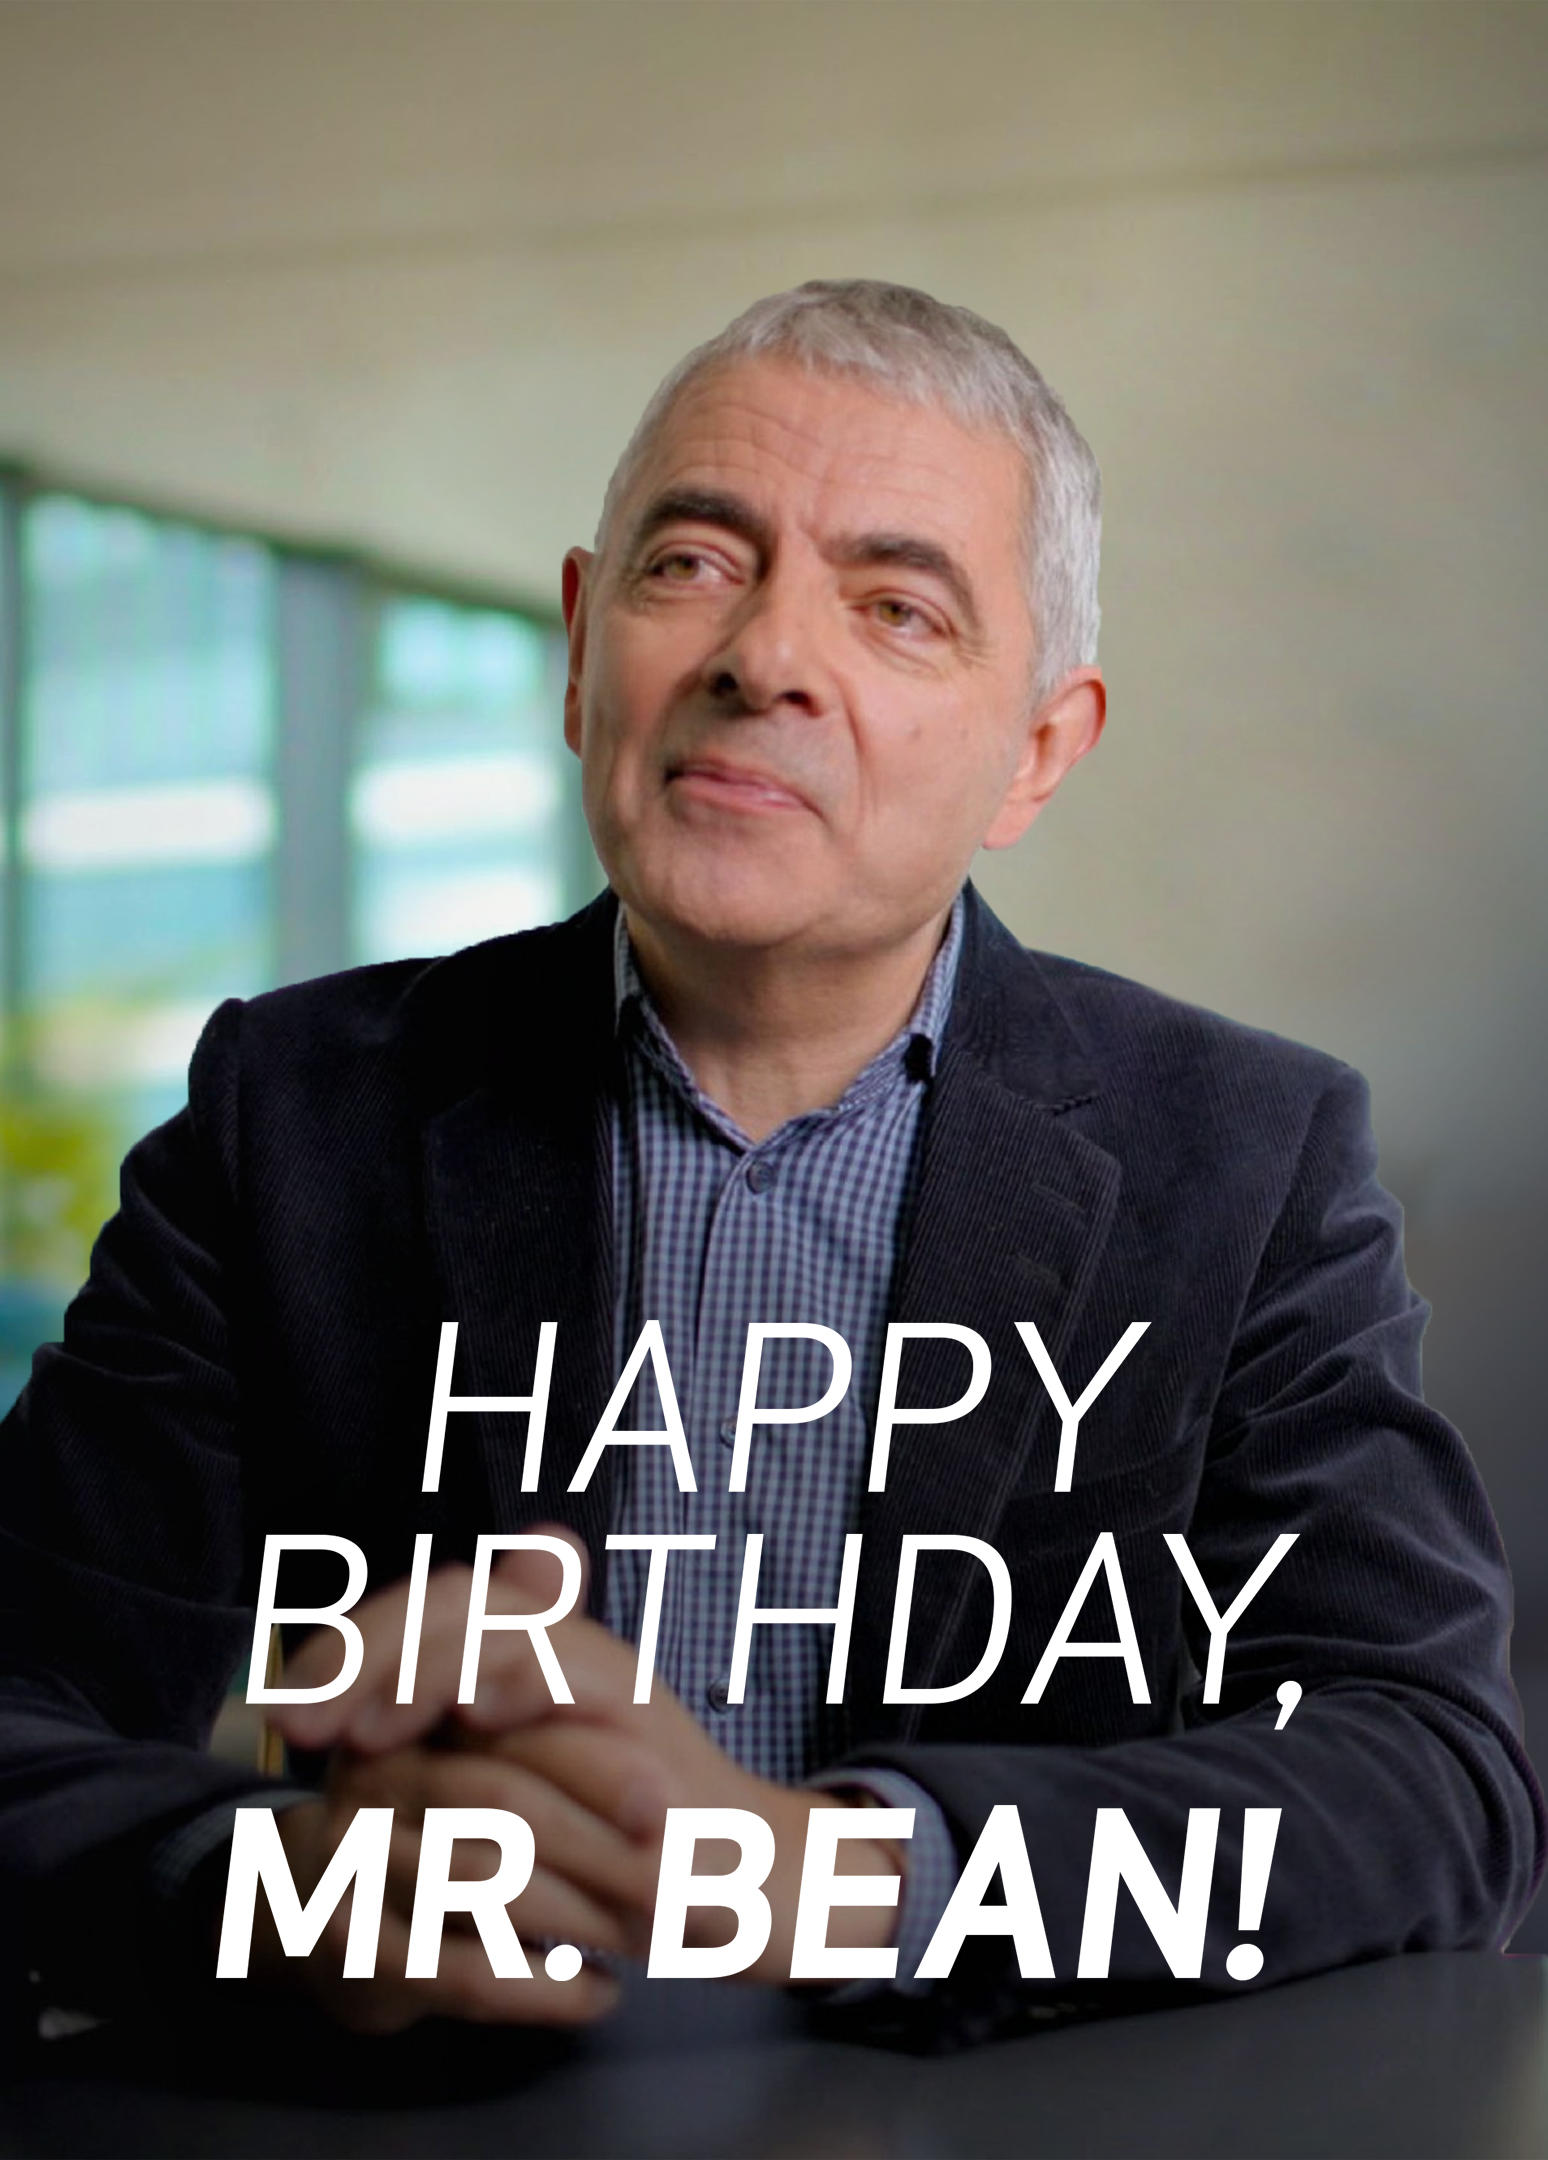 Happy Birthday, Mr. Bean!